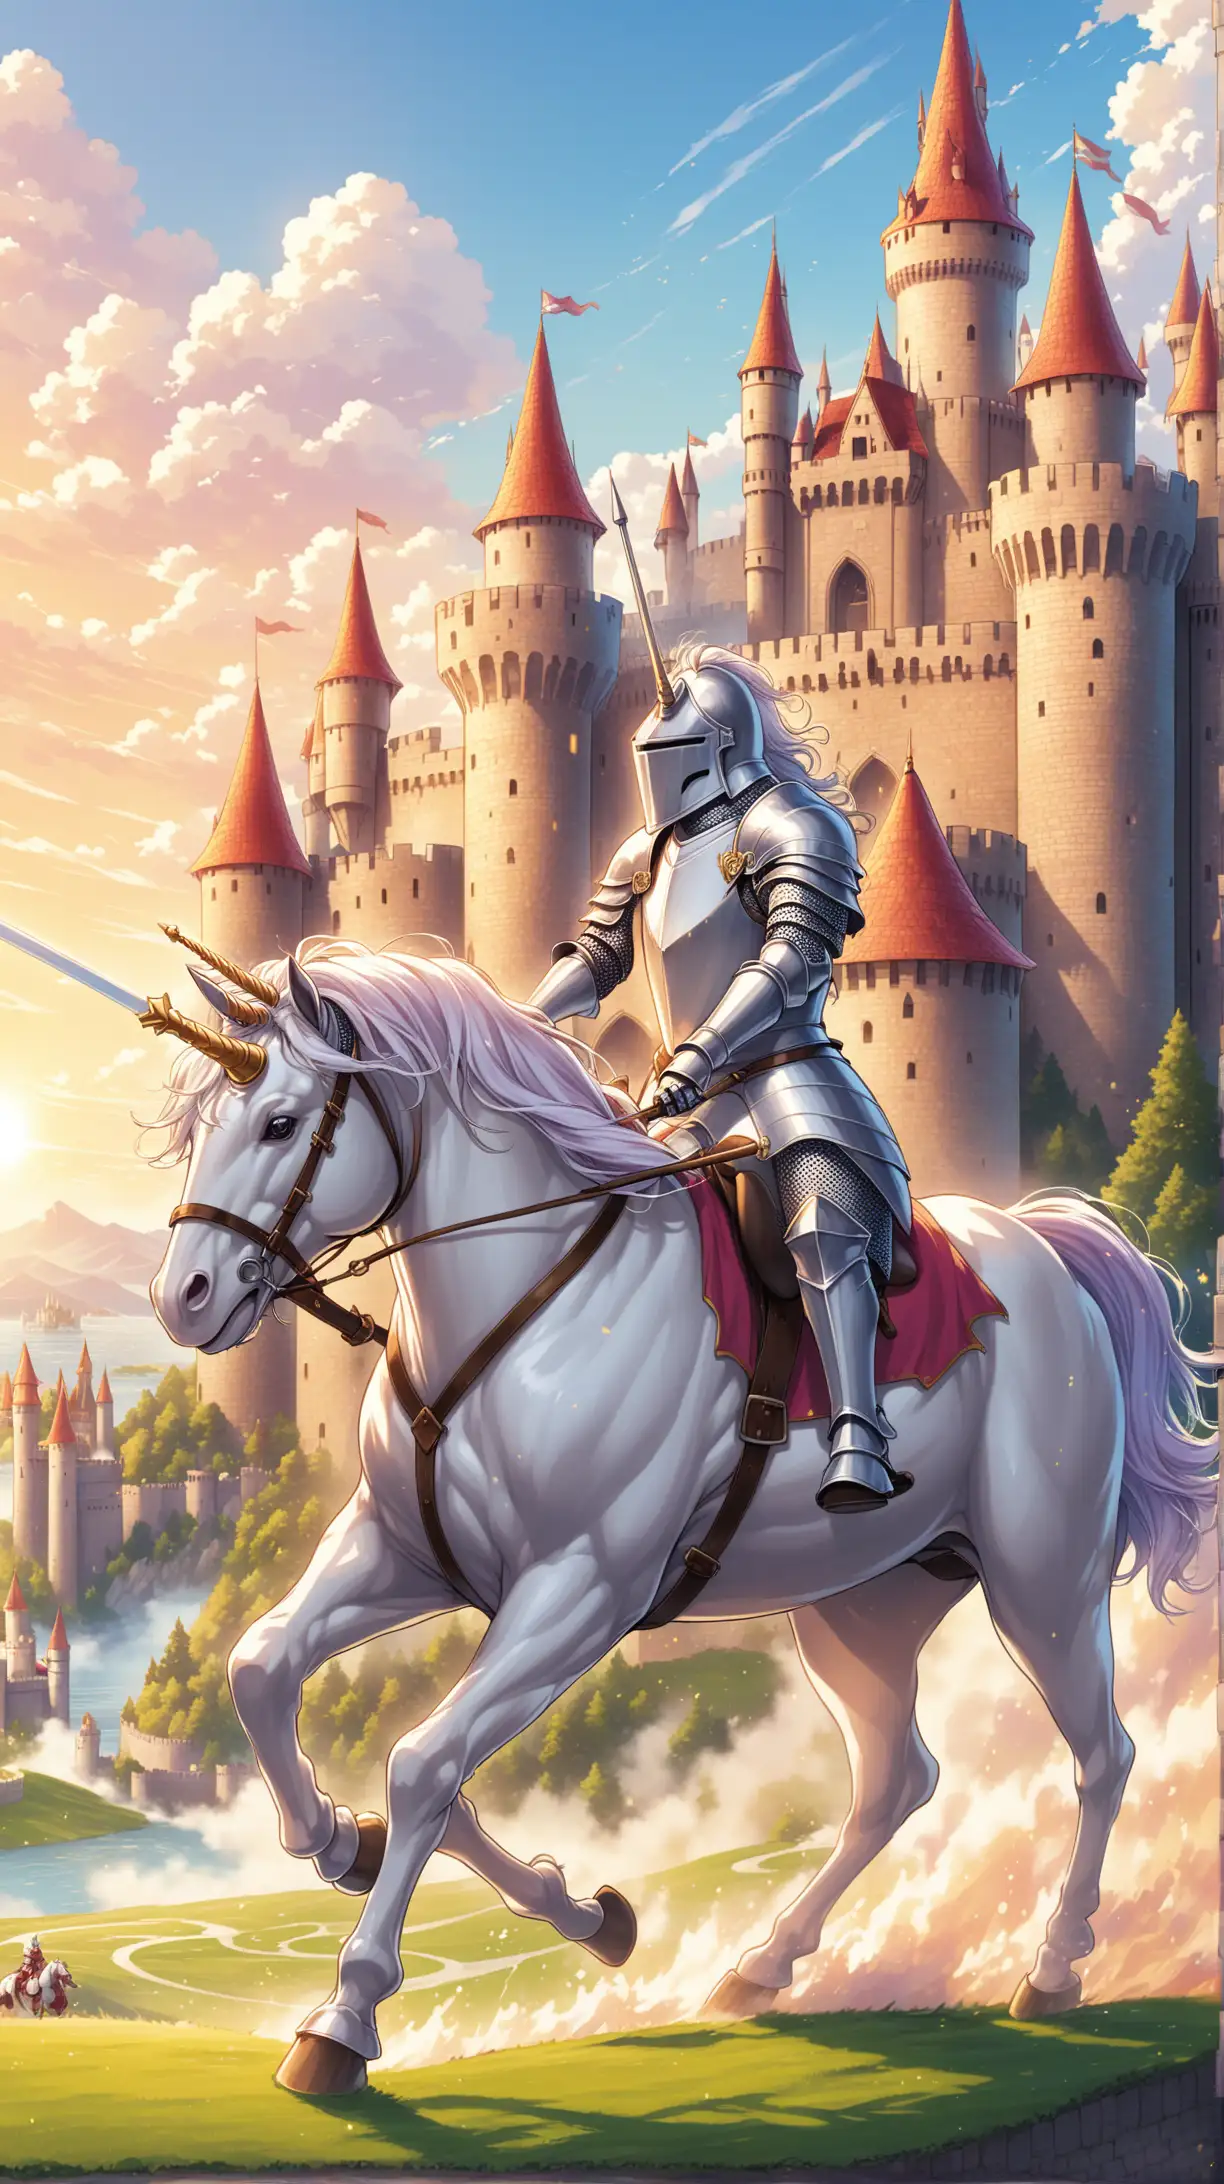 Knight Riding Unicorn Defending Castle